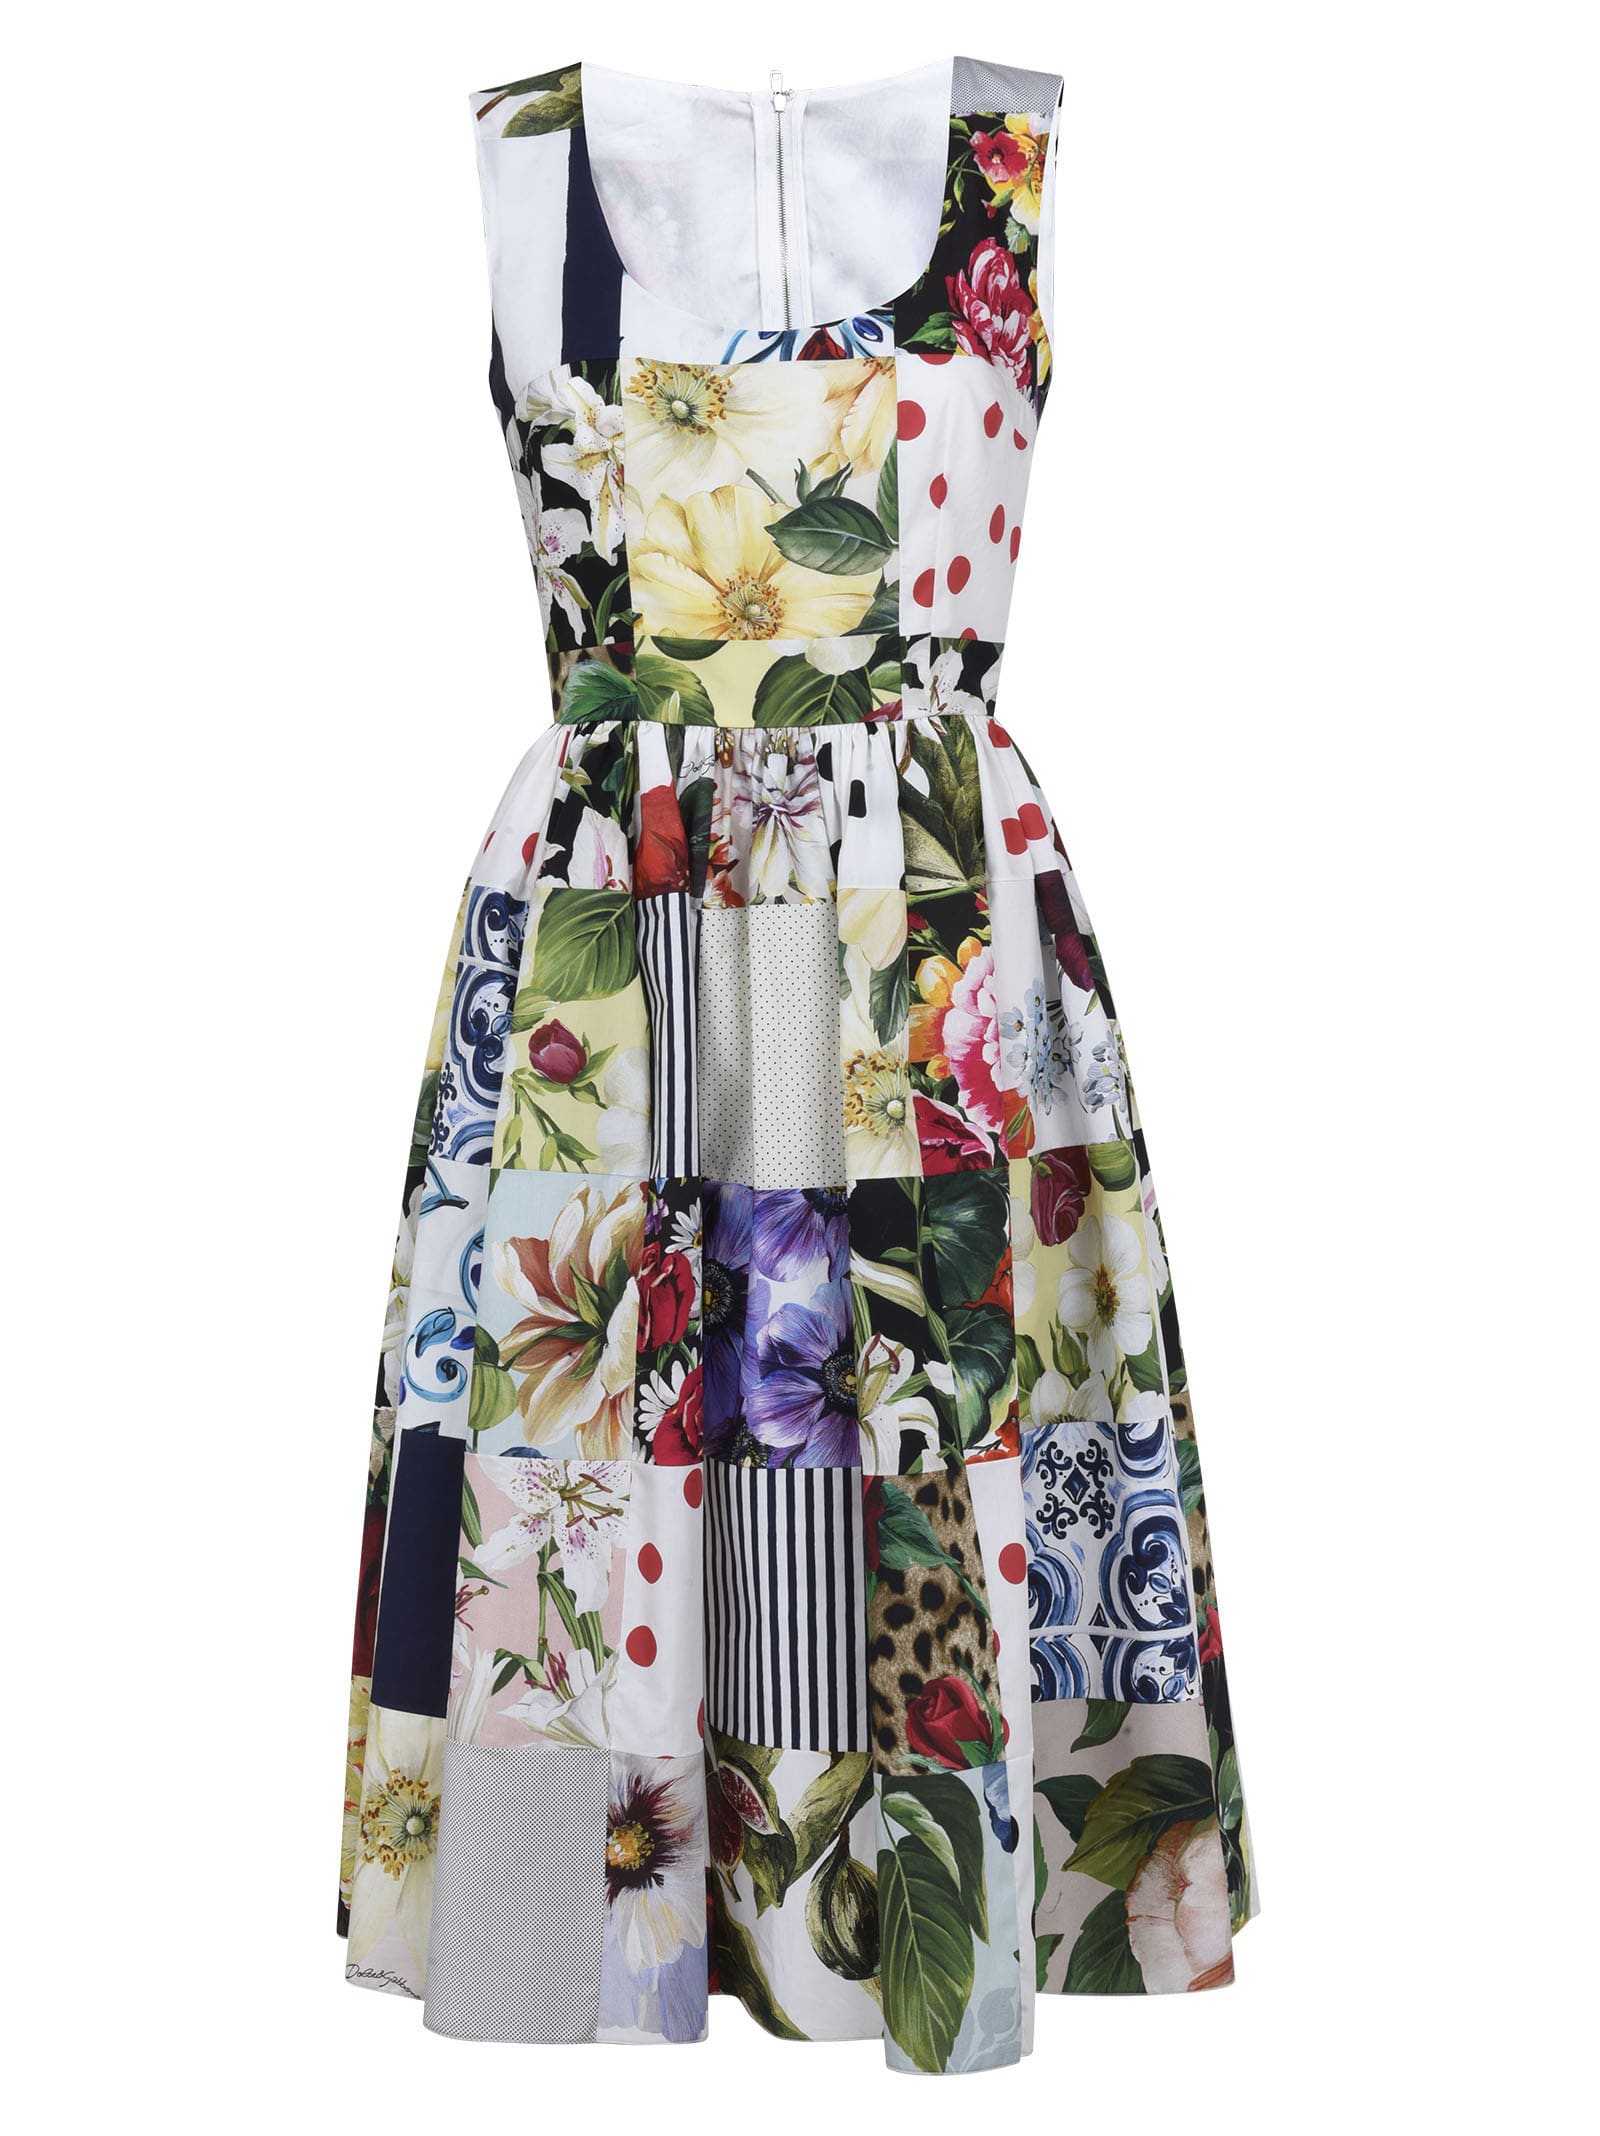 Dolce & Gabbana Floral Sleeveless Dress